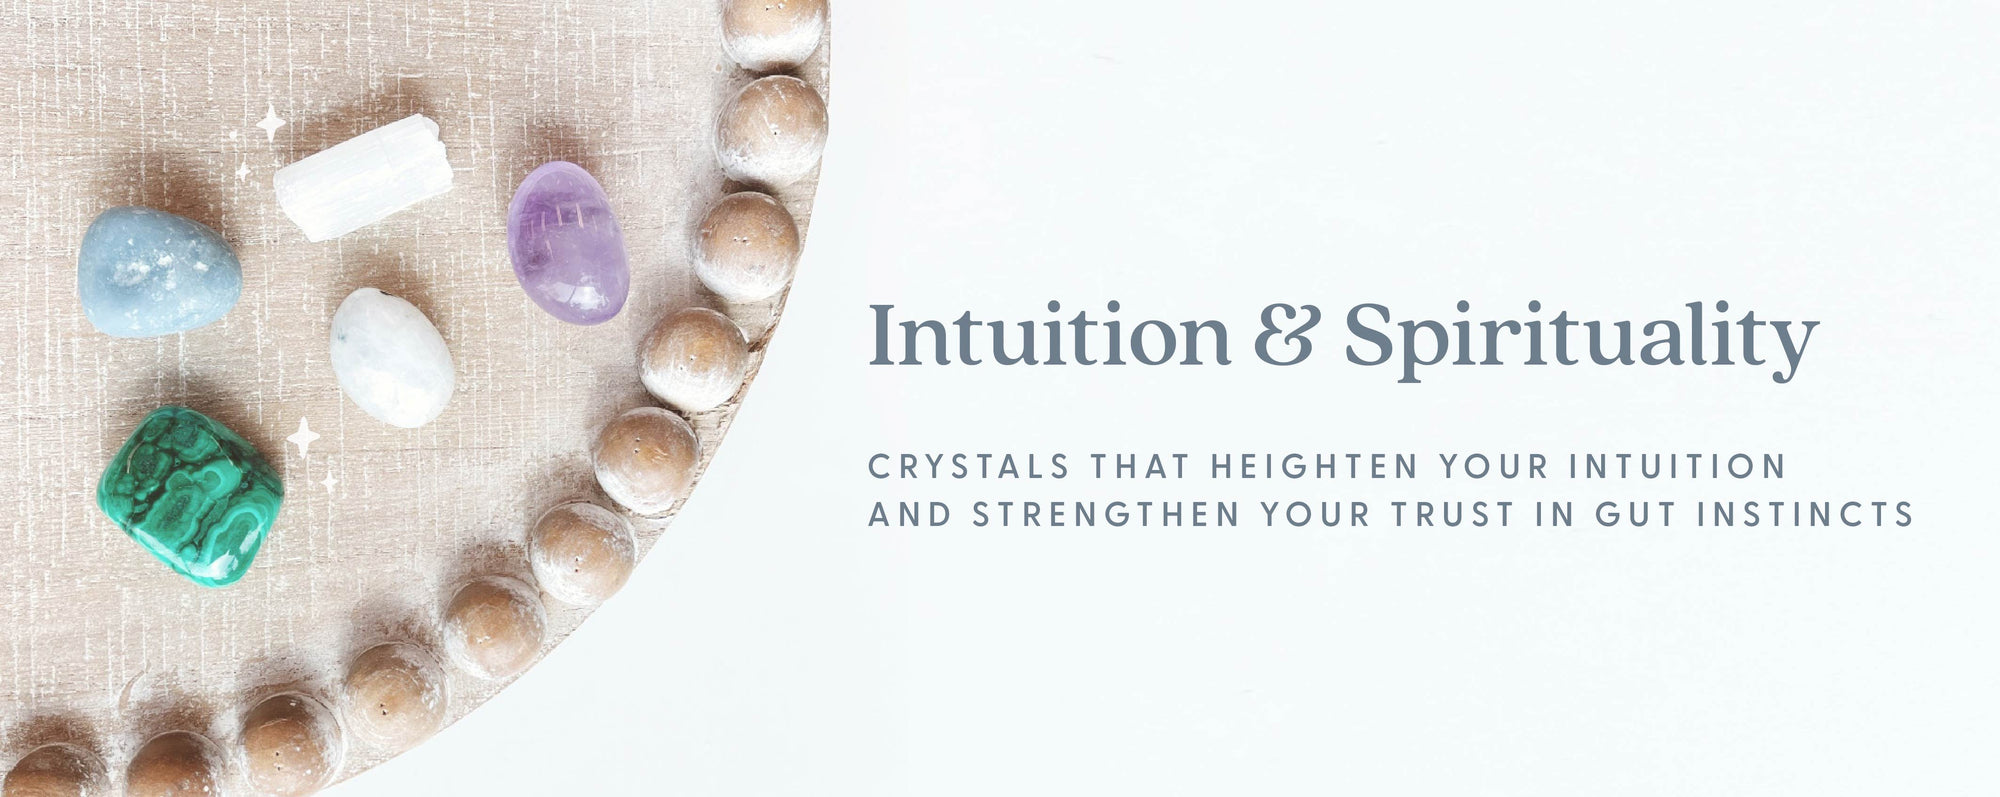 Intuition & Spirituality